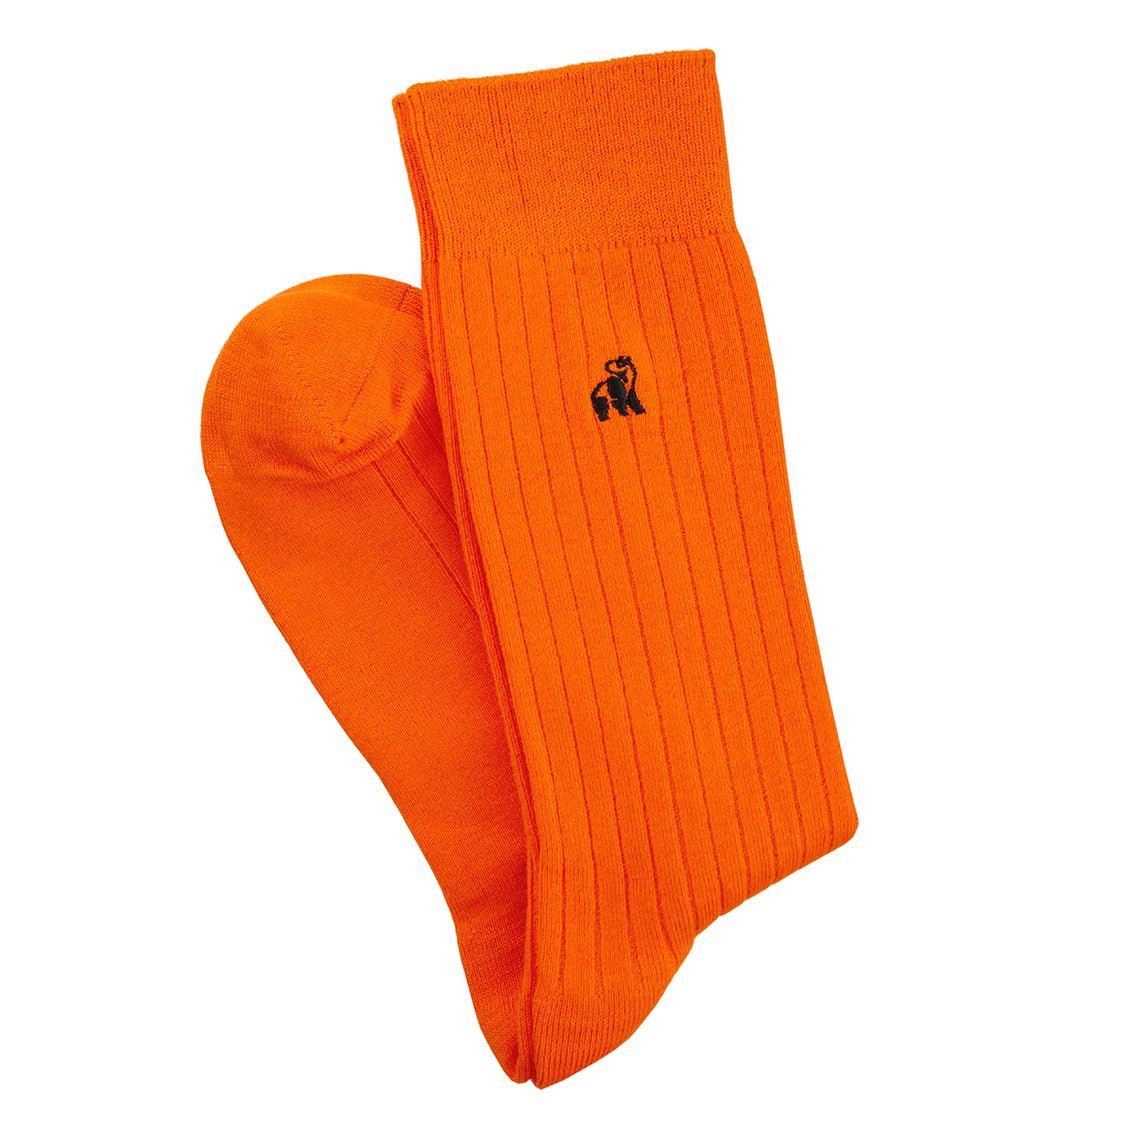 Bamboo Socks - Tangerine Orange - Life of Riley